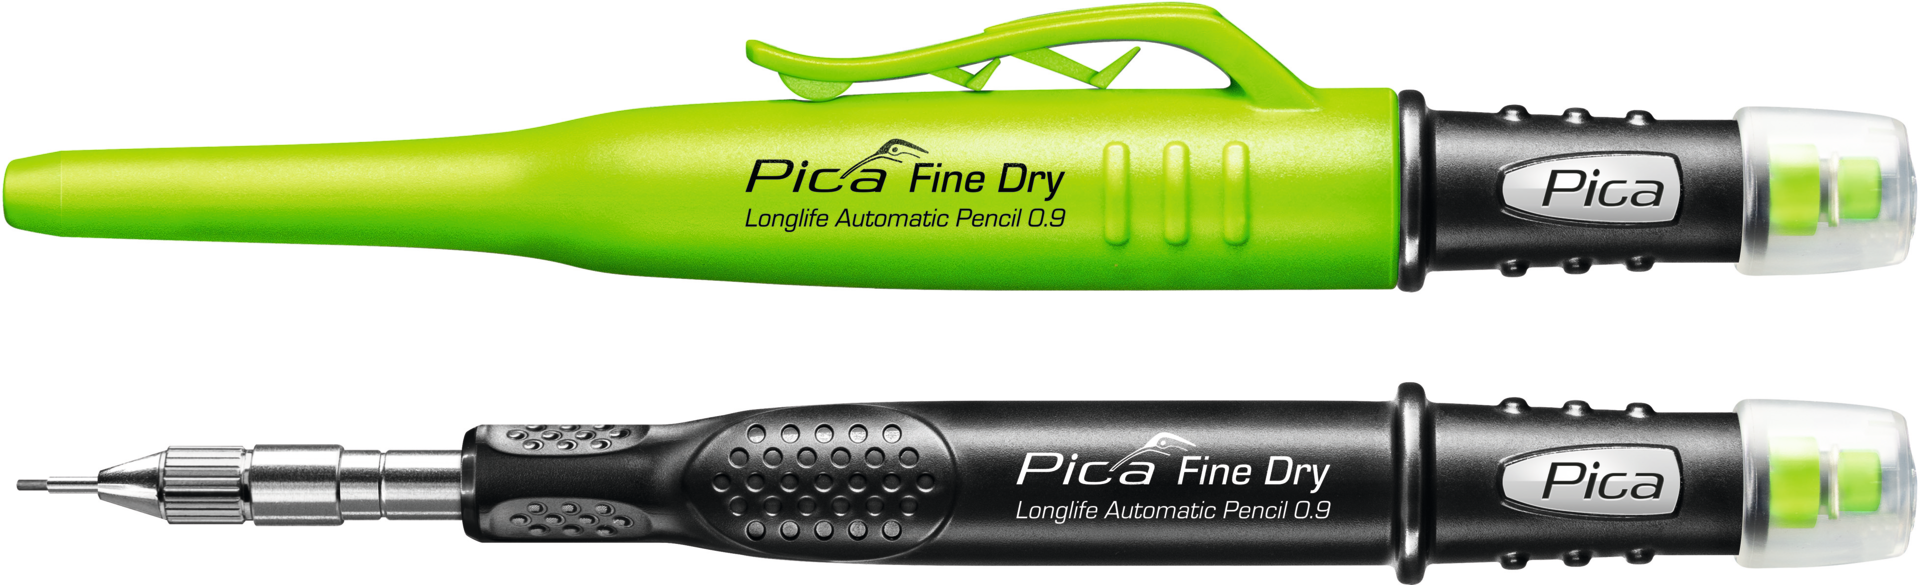 Tieflochmarker abwischbar Pica-Fine-Dry® "Longlife Automatic Pencil"